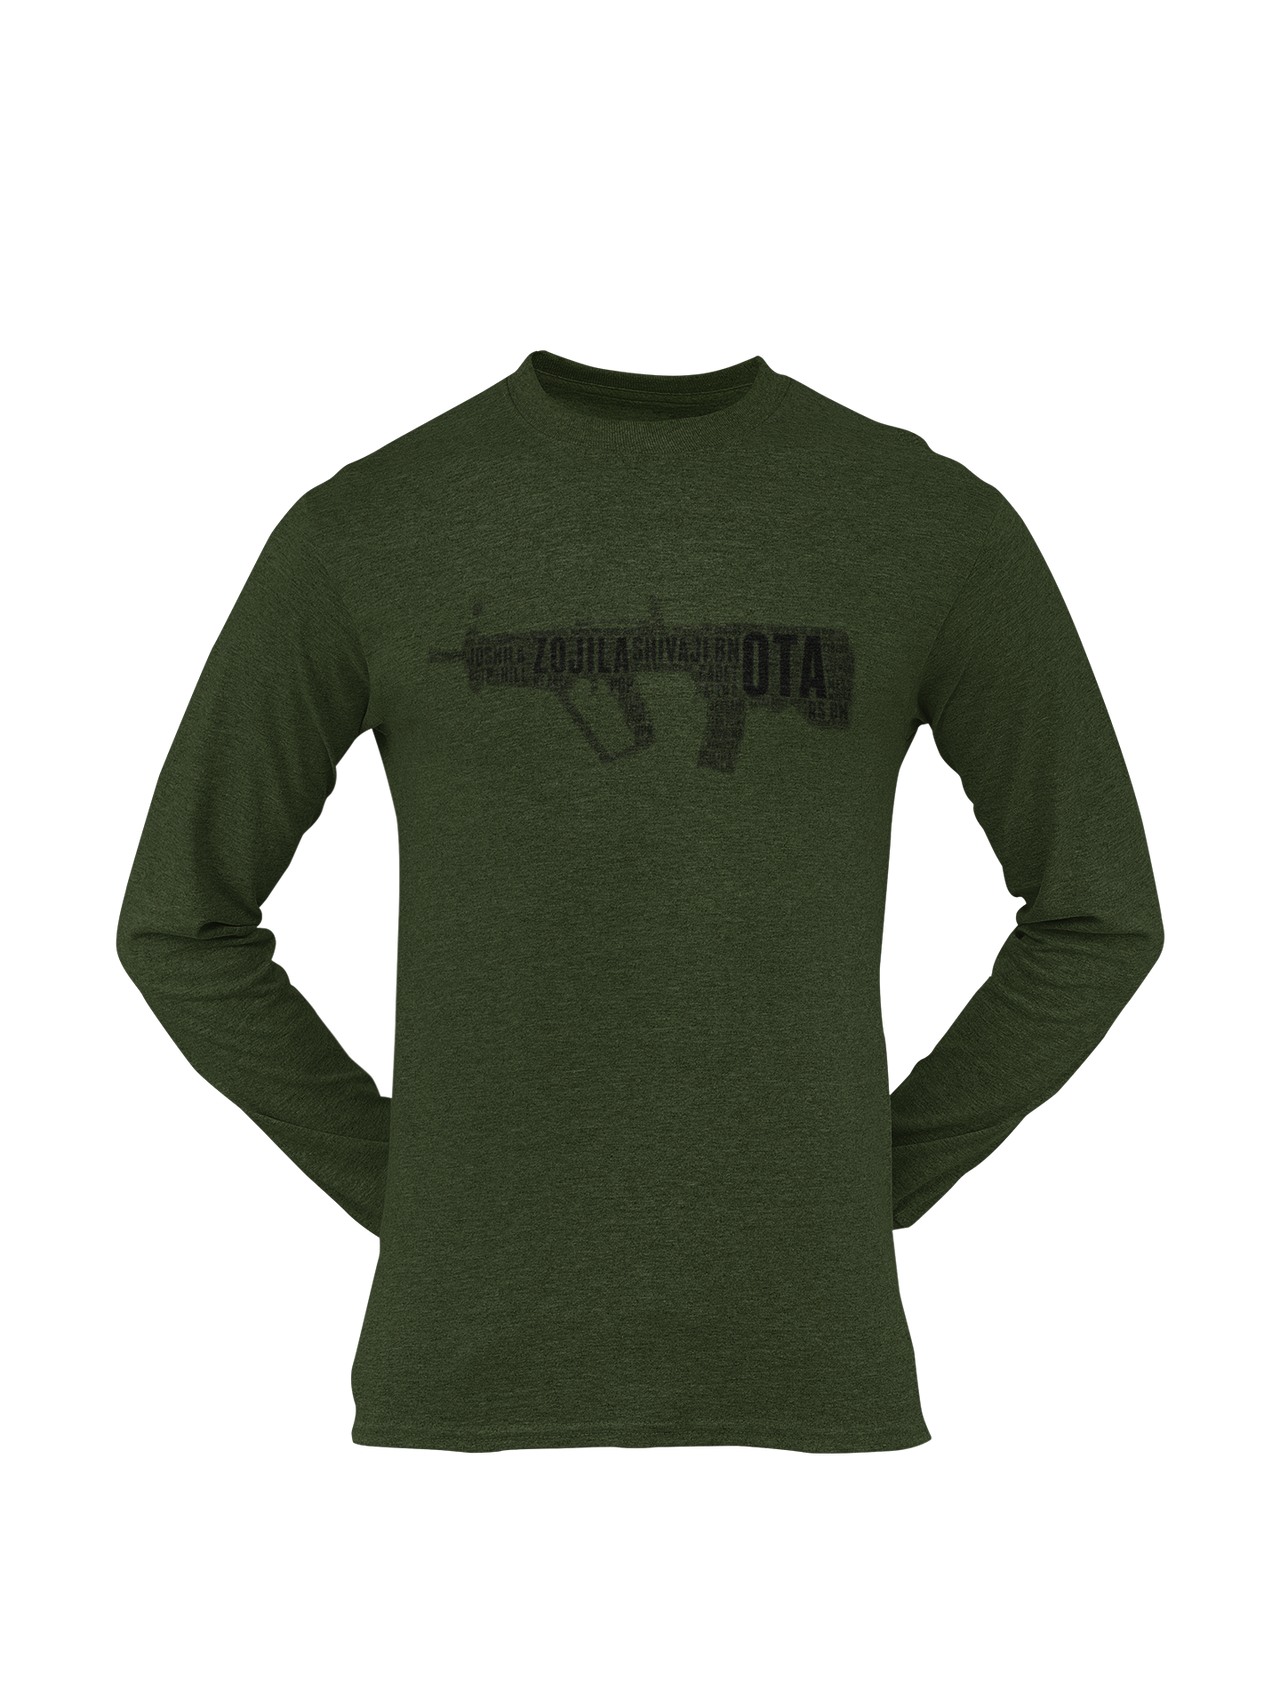 OTA T-shirt - Word Cloud Zojila - Tavor (Men)